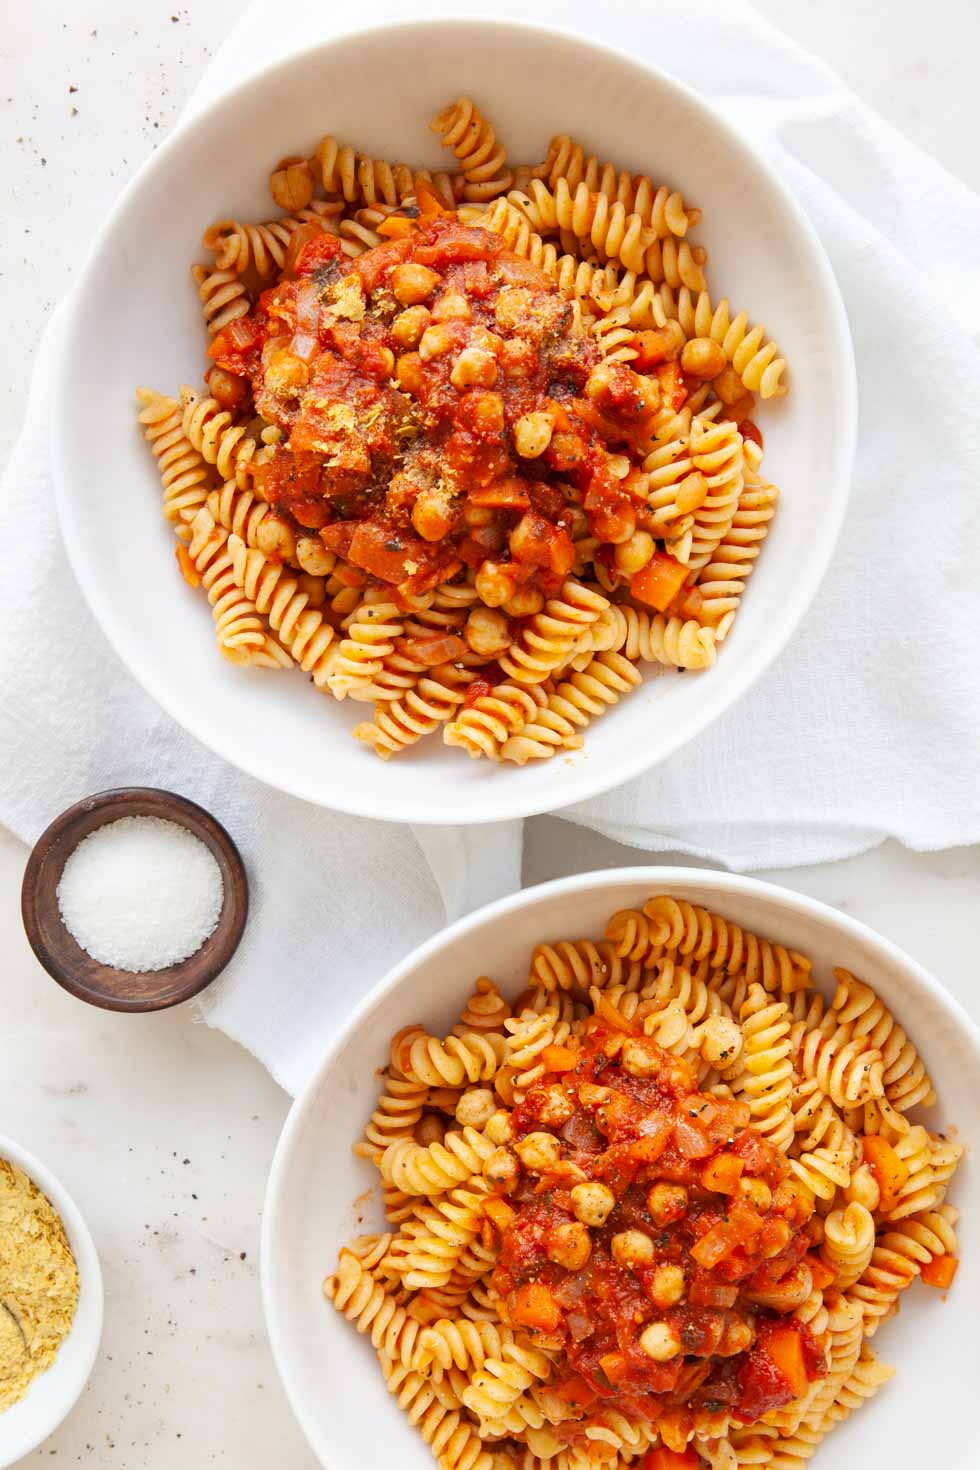 Vegan Pasta with Chickpea & Tomato Sauce